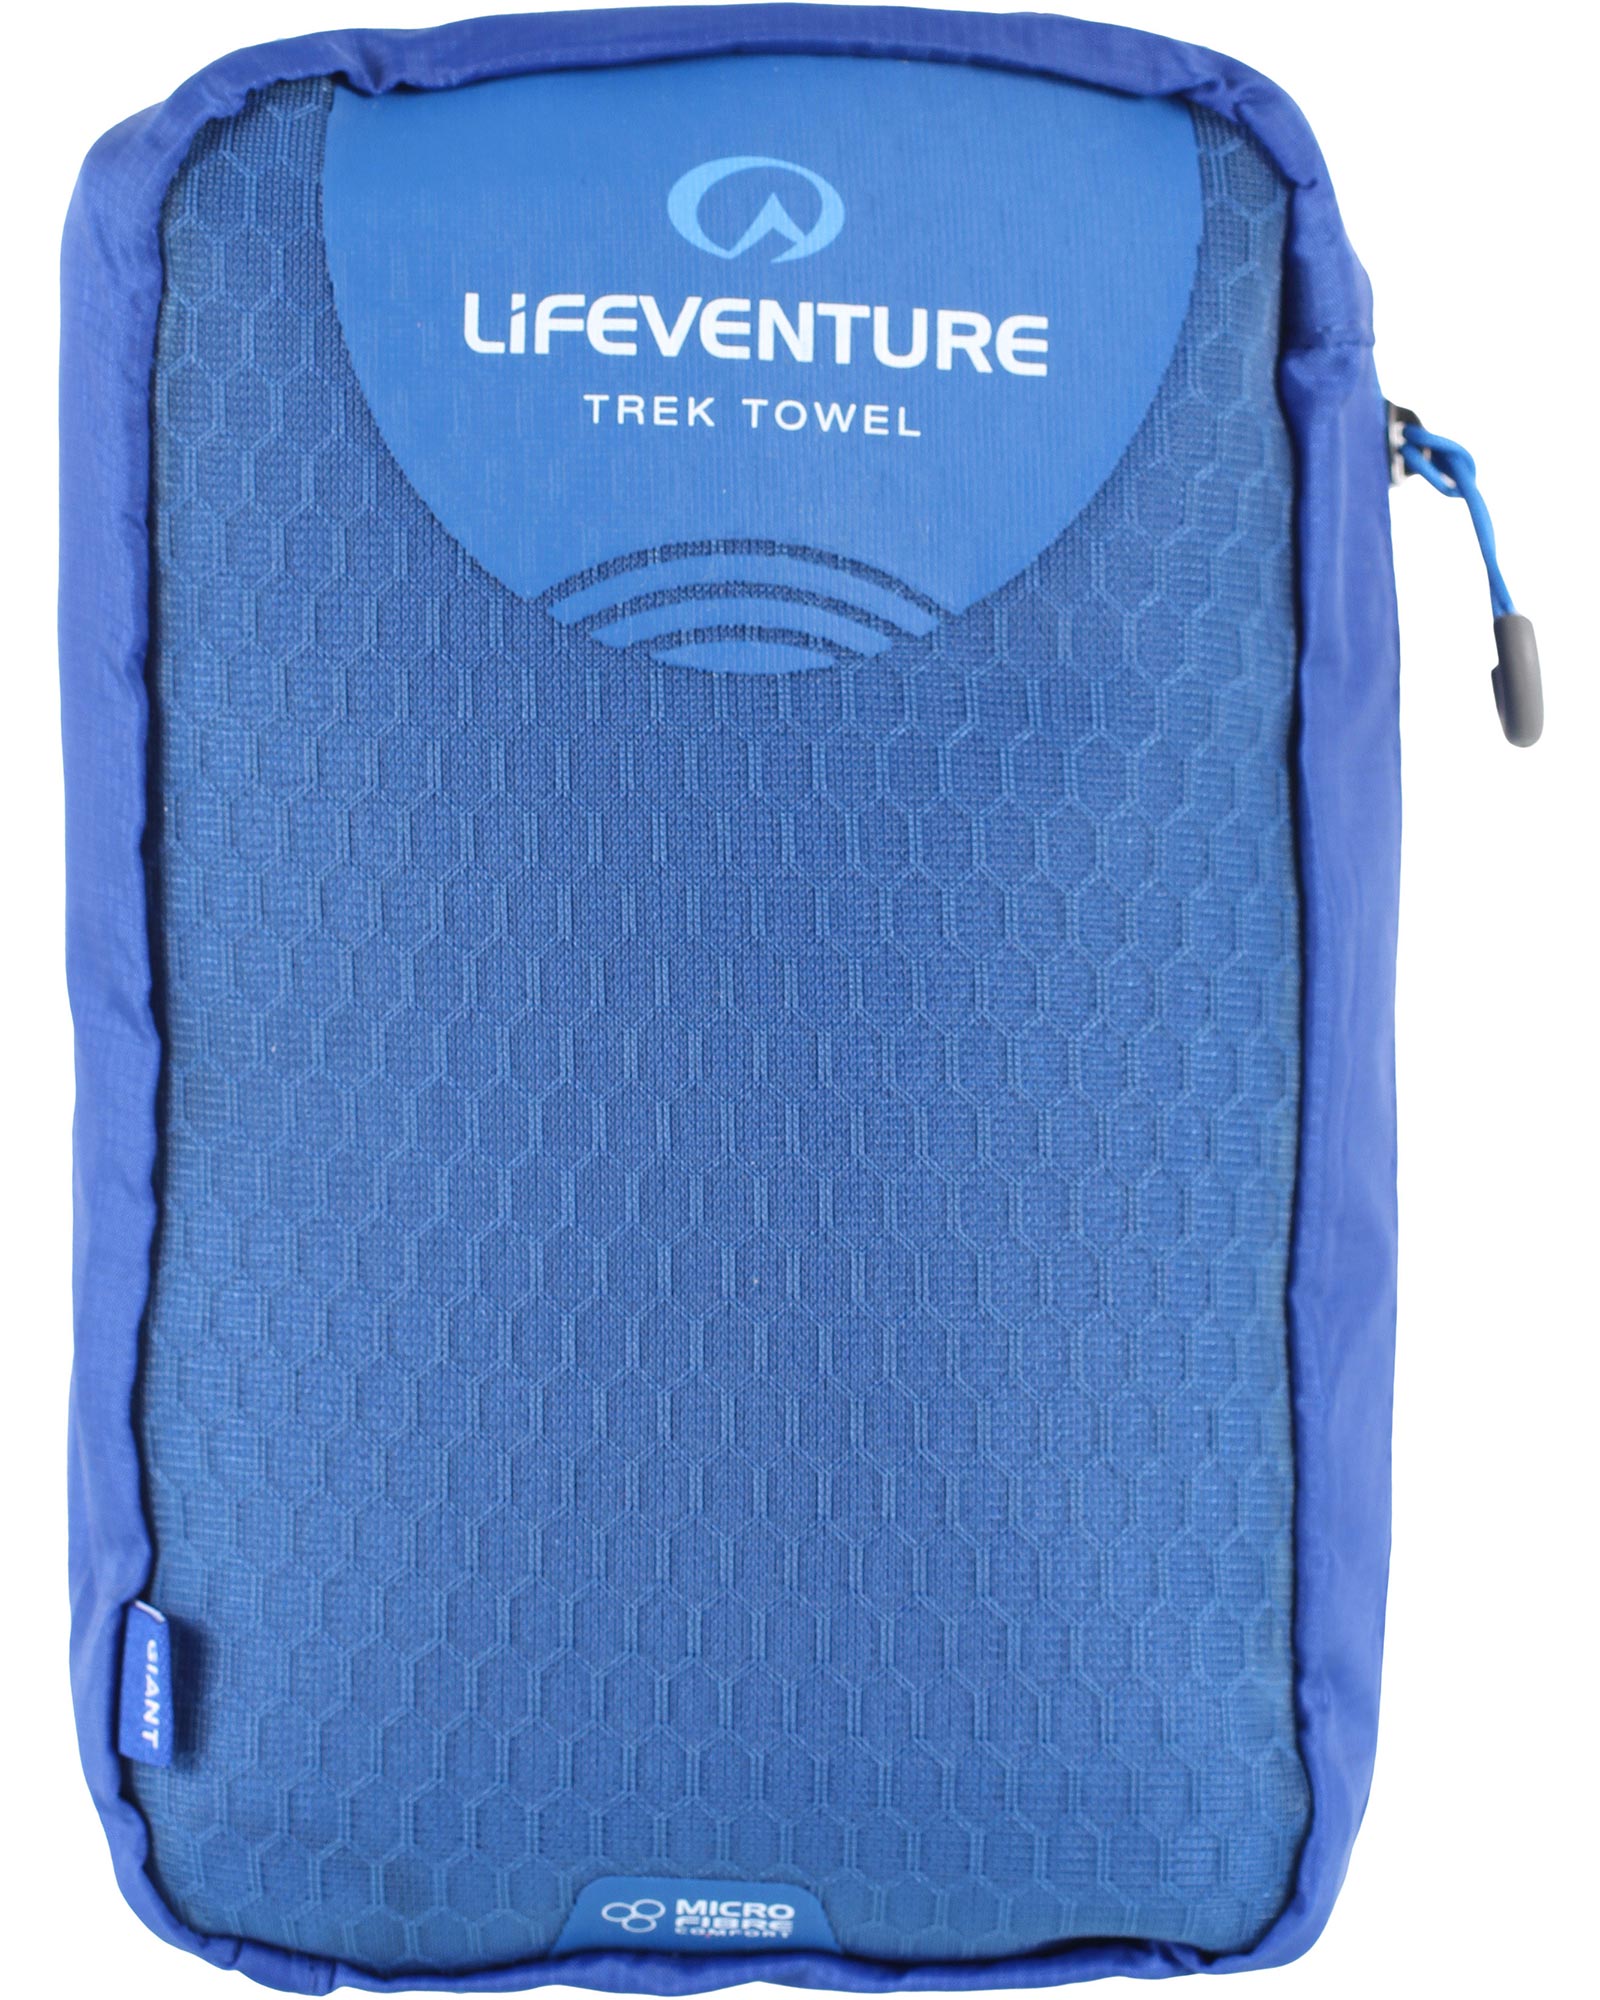 Lifeventure MicroFibre Trek Towel   Giant - Blue